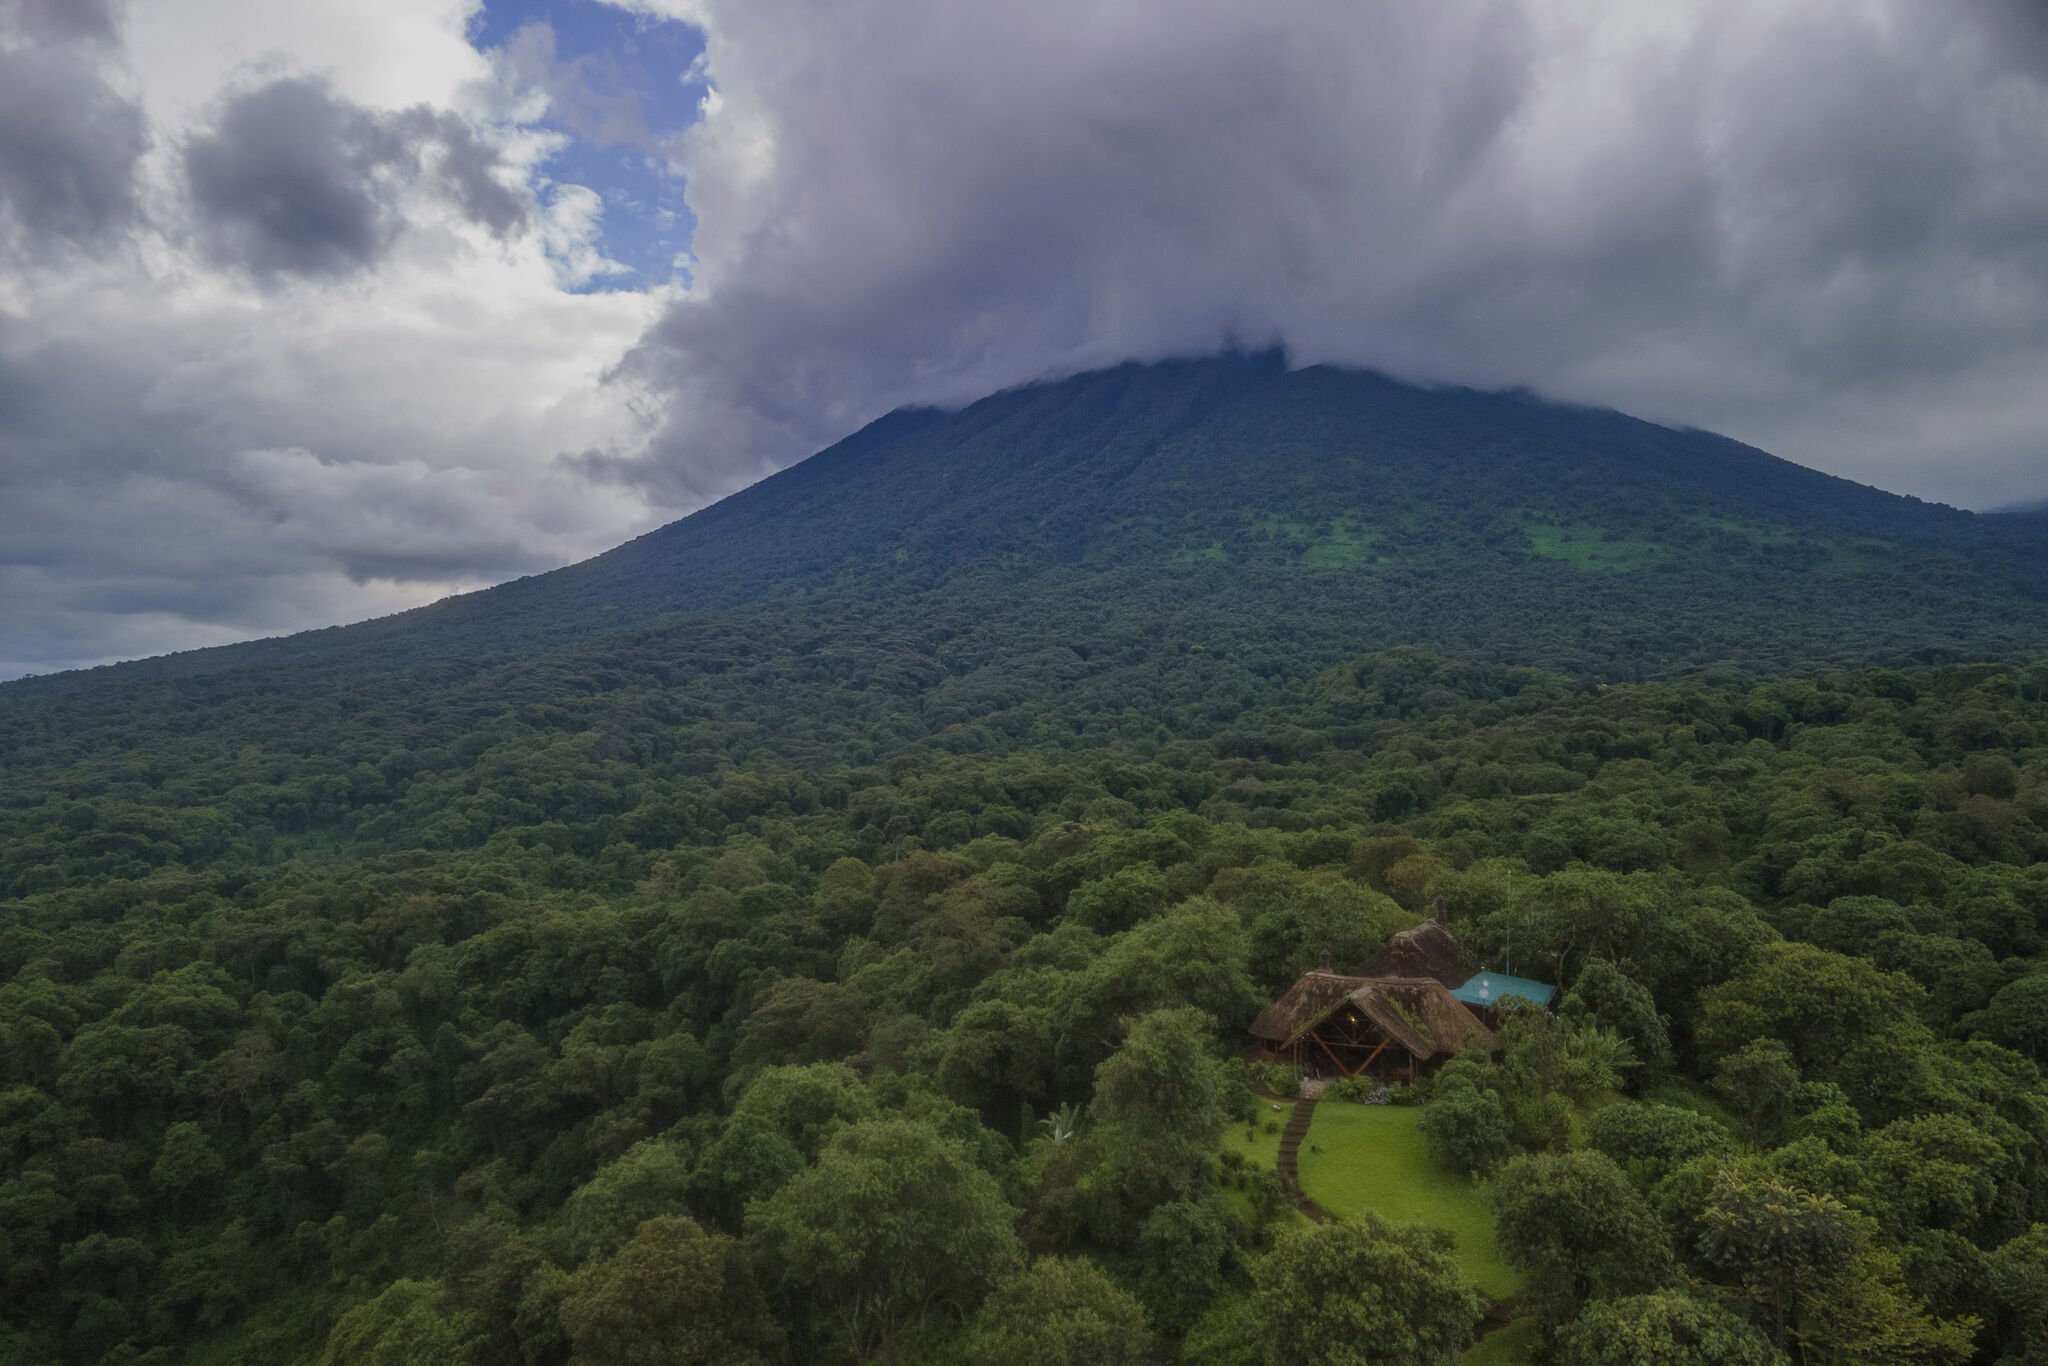 Kibumba Camp lies nestled in the rainforest below Mt Mikeno